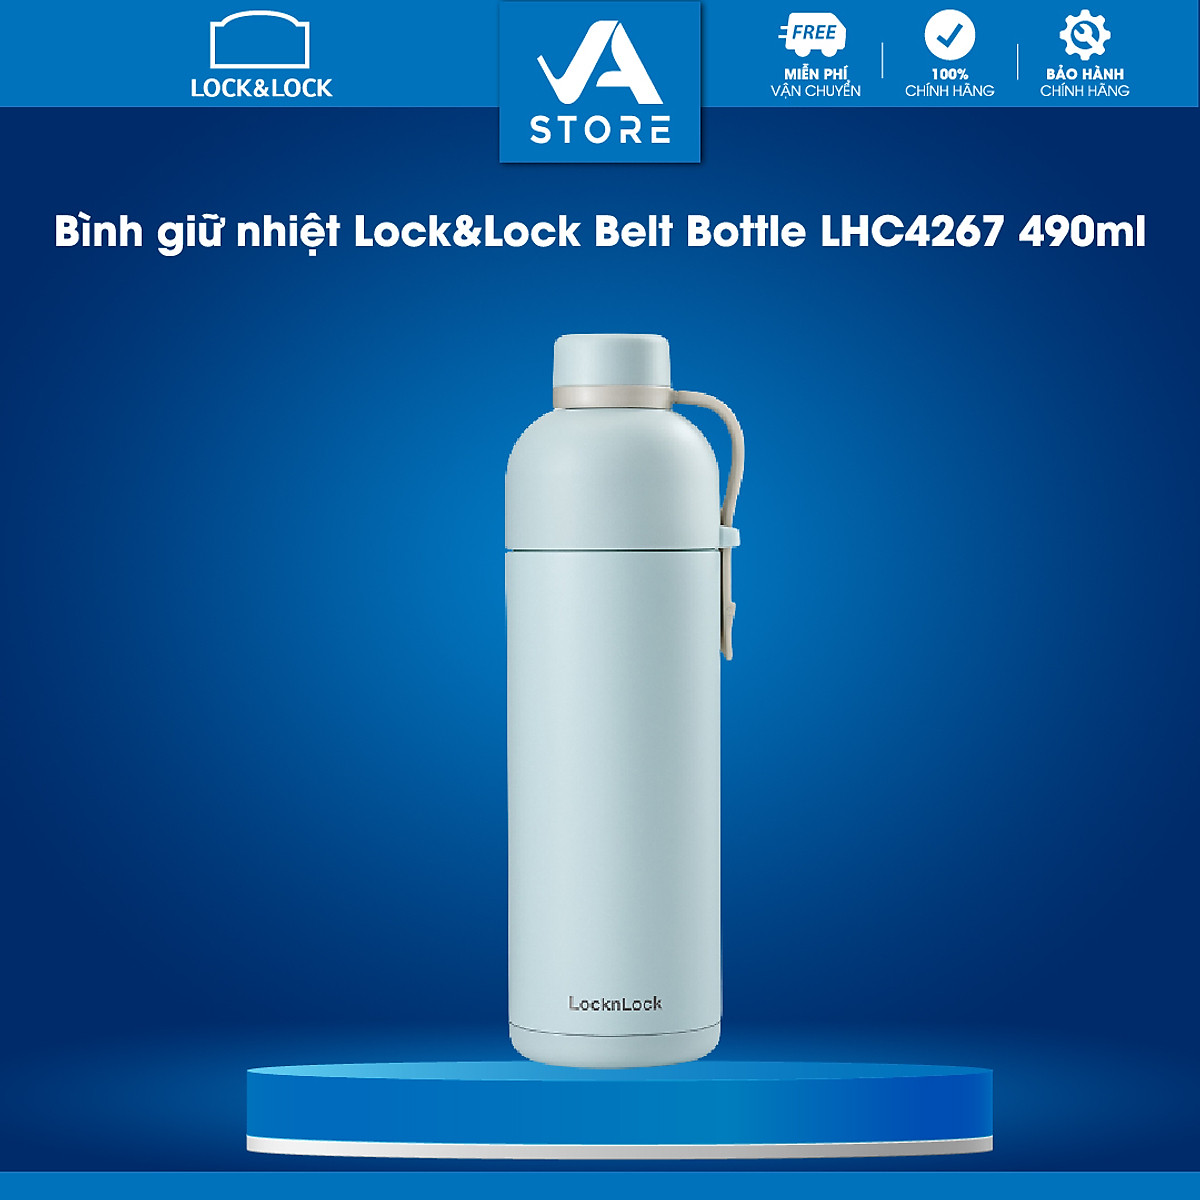 Bình giữ nhiệt Lock&Lock Belt Bottle LHC4267 490ml